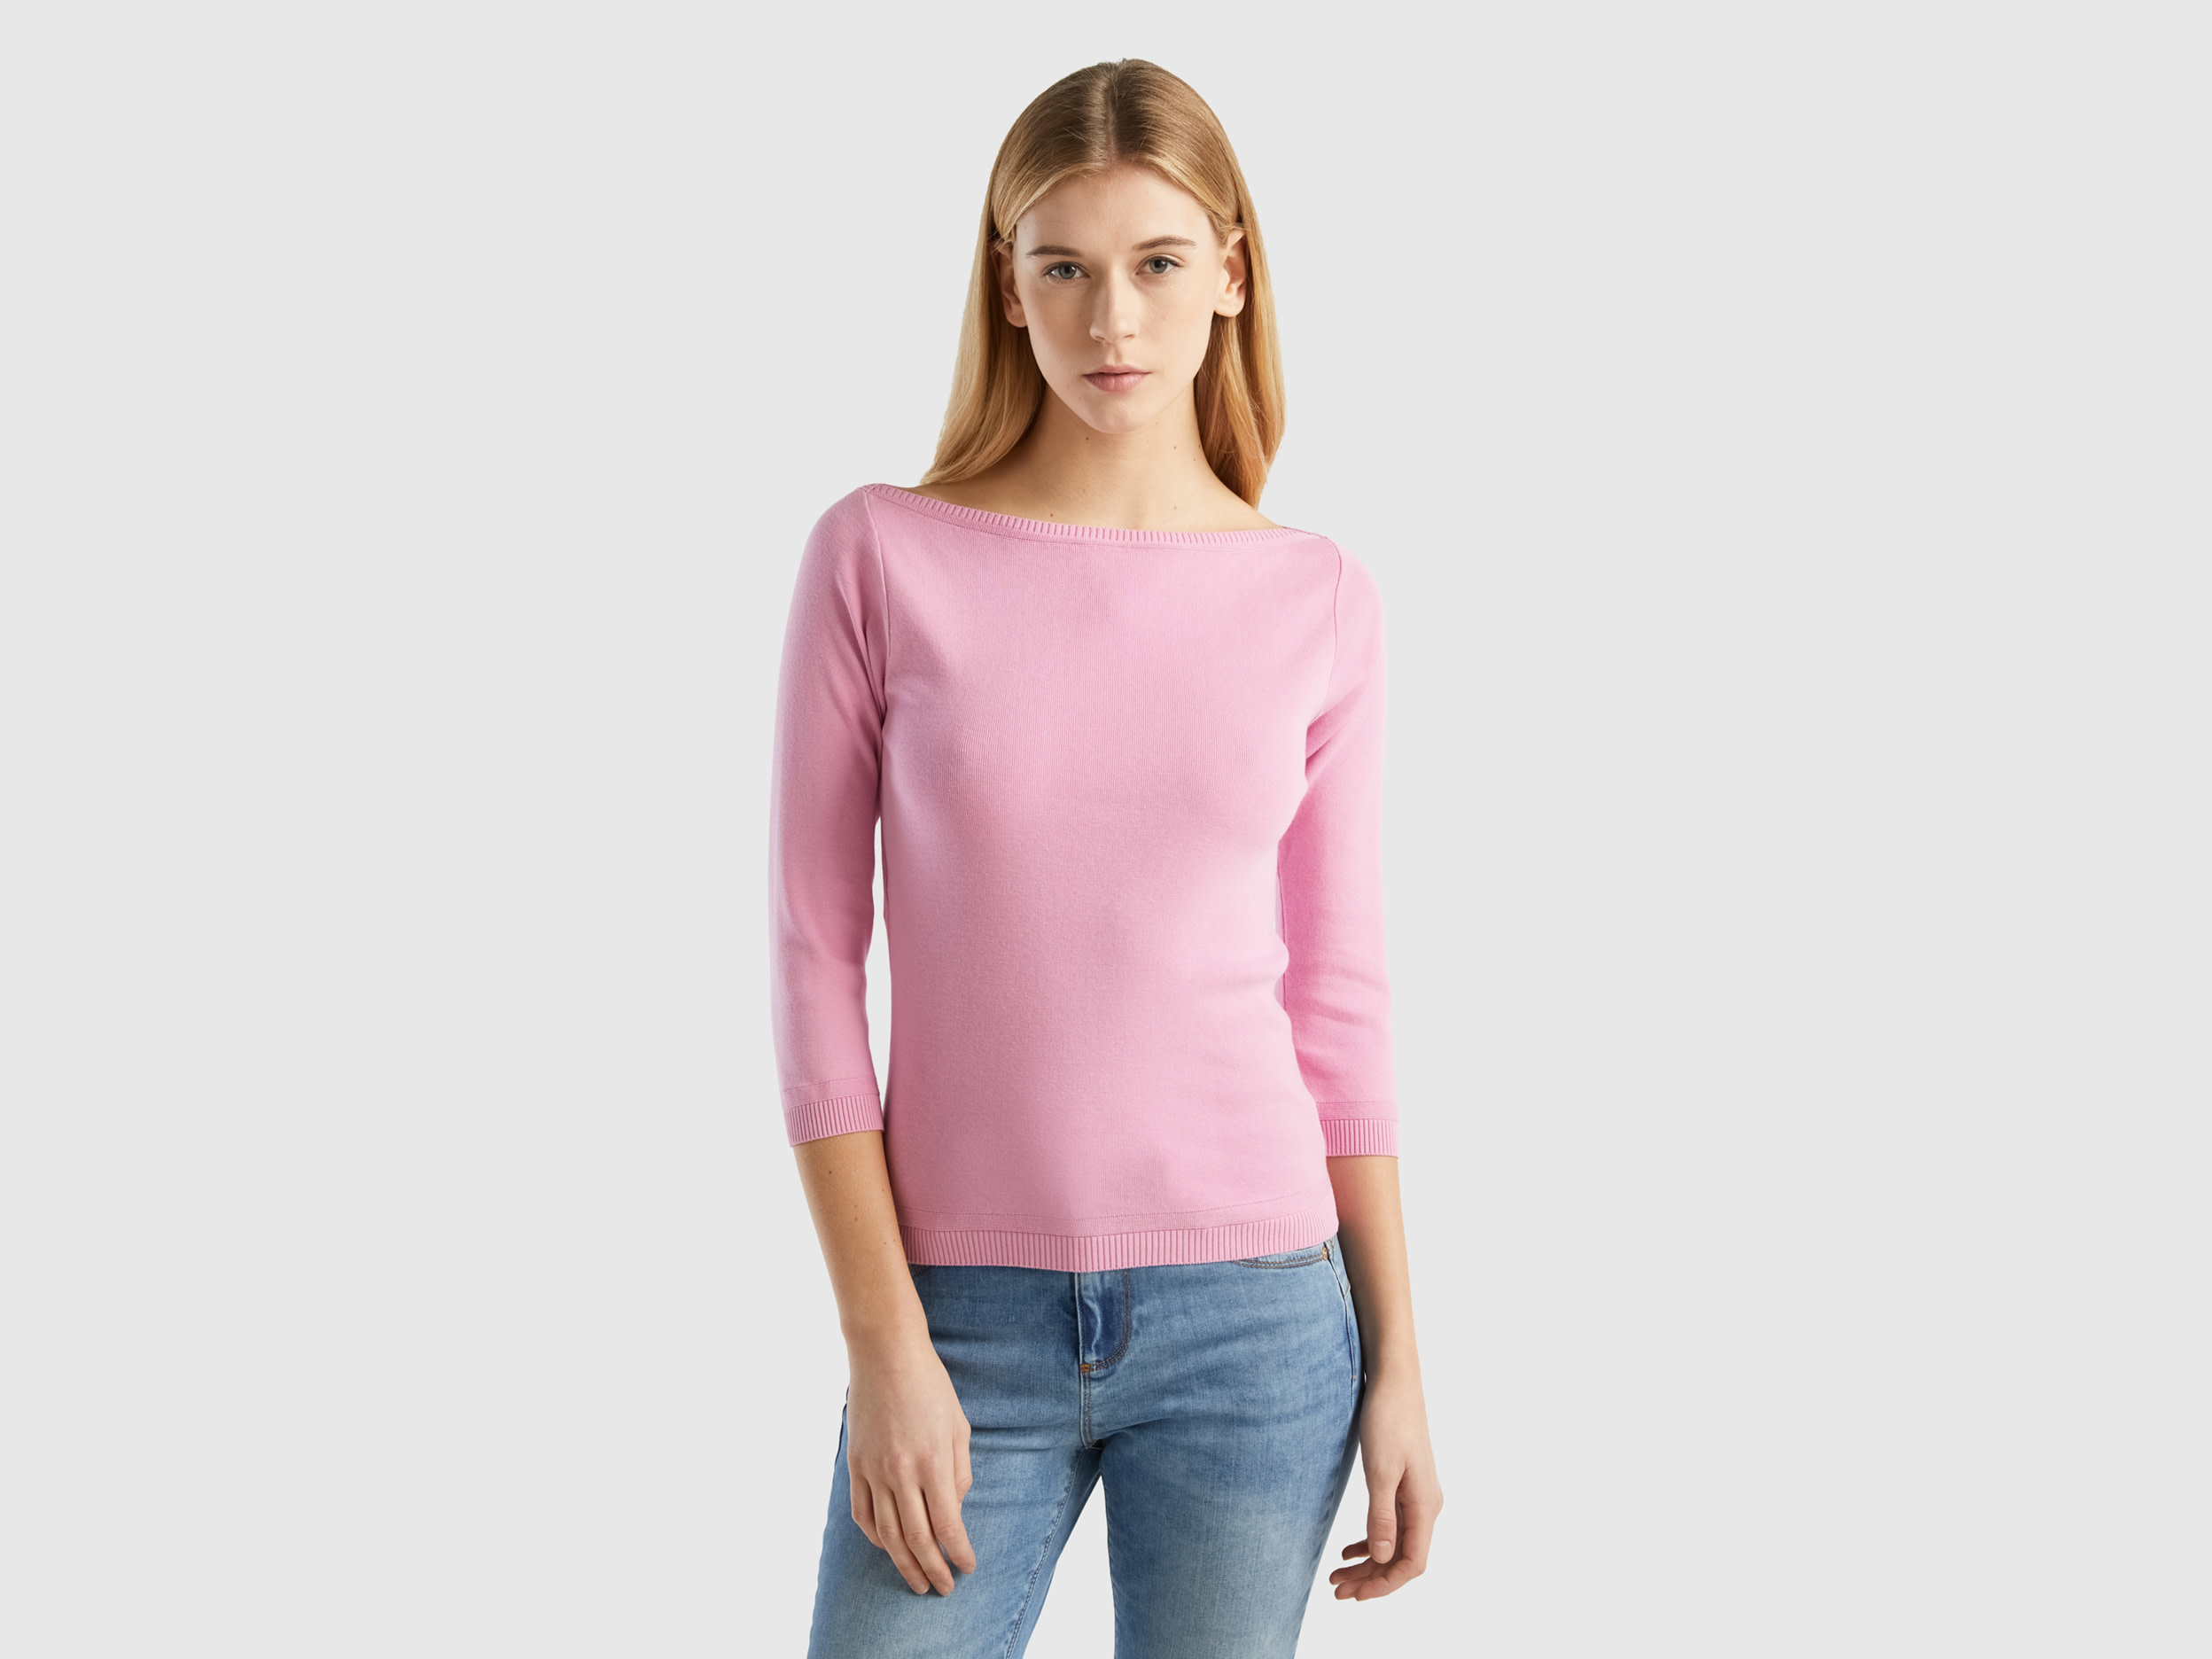 Benetton, 100% Cotton Boat Neck Sweater, size M, Pastel Pink, Women